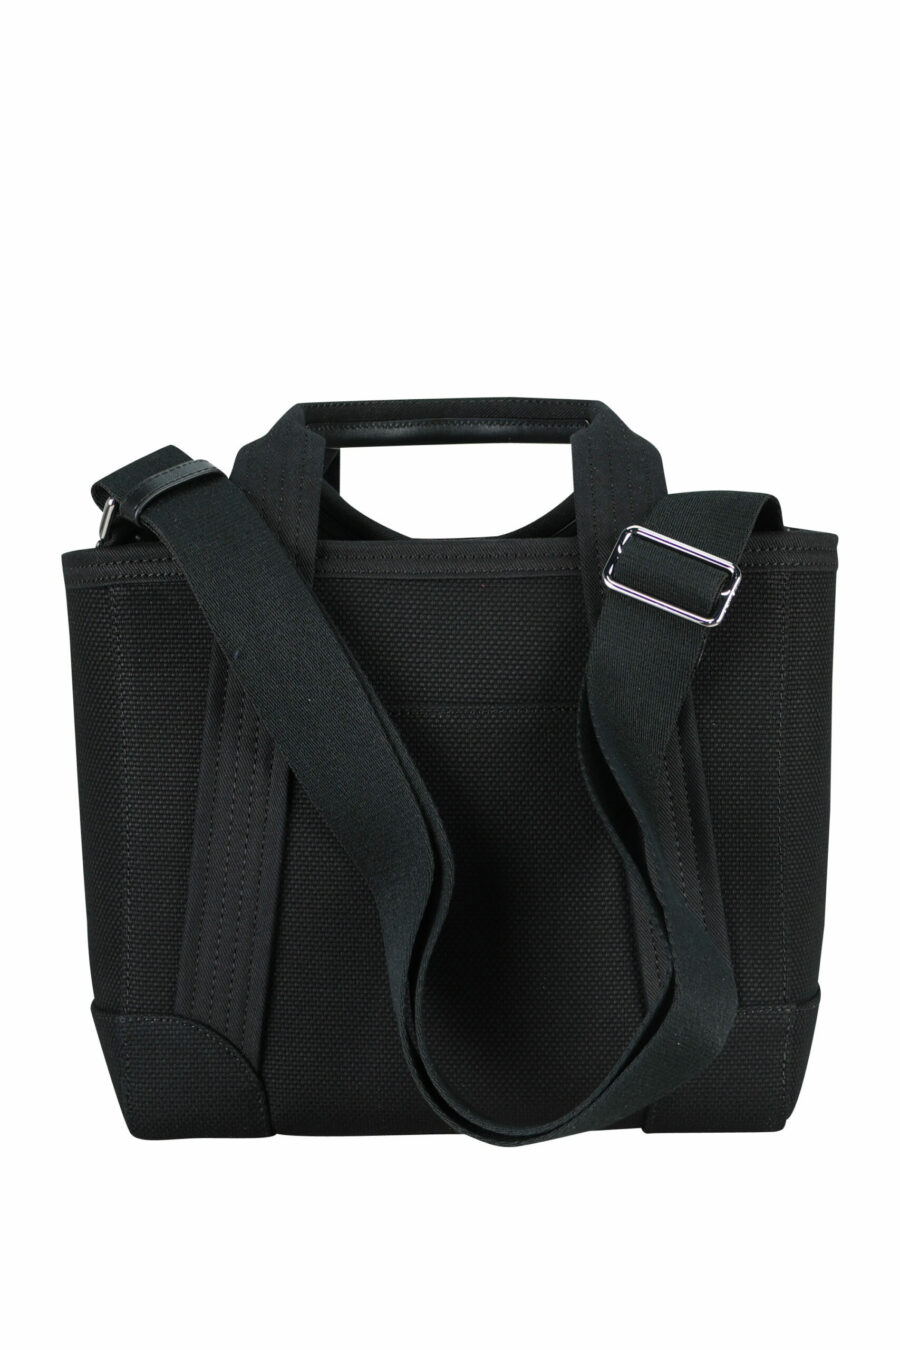 Tote bag bandolera negro con logo "kenzo tag" - 3612230579071 2 scaled